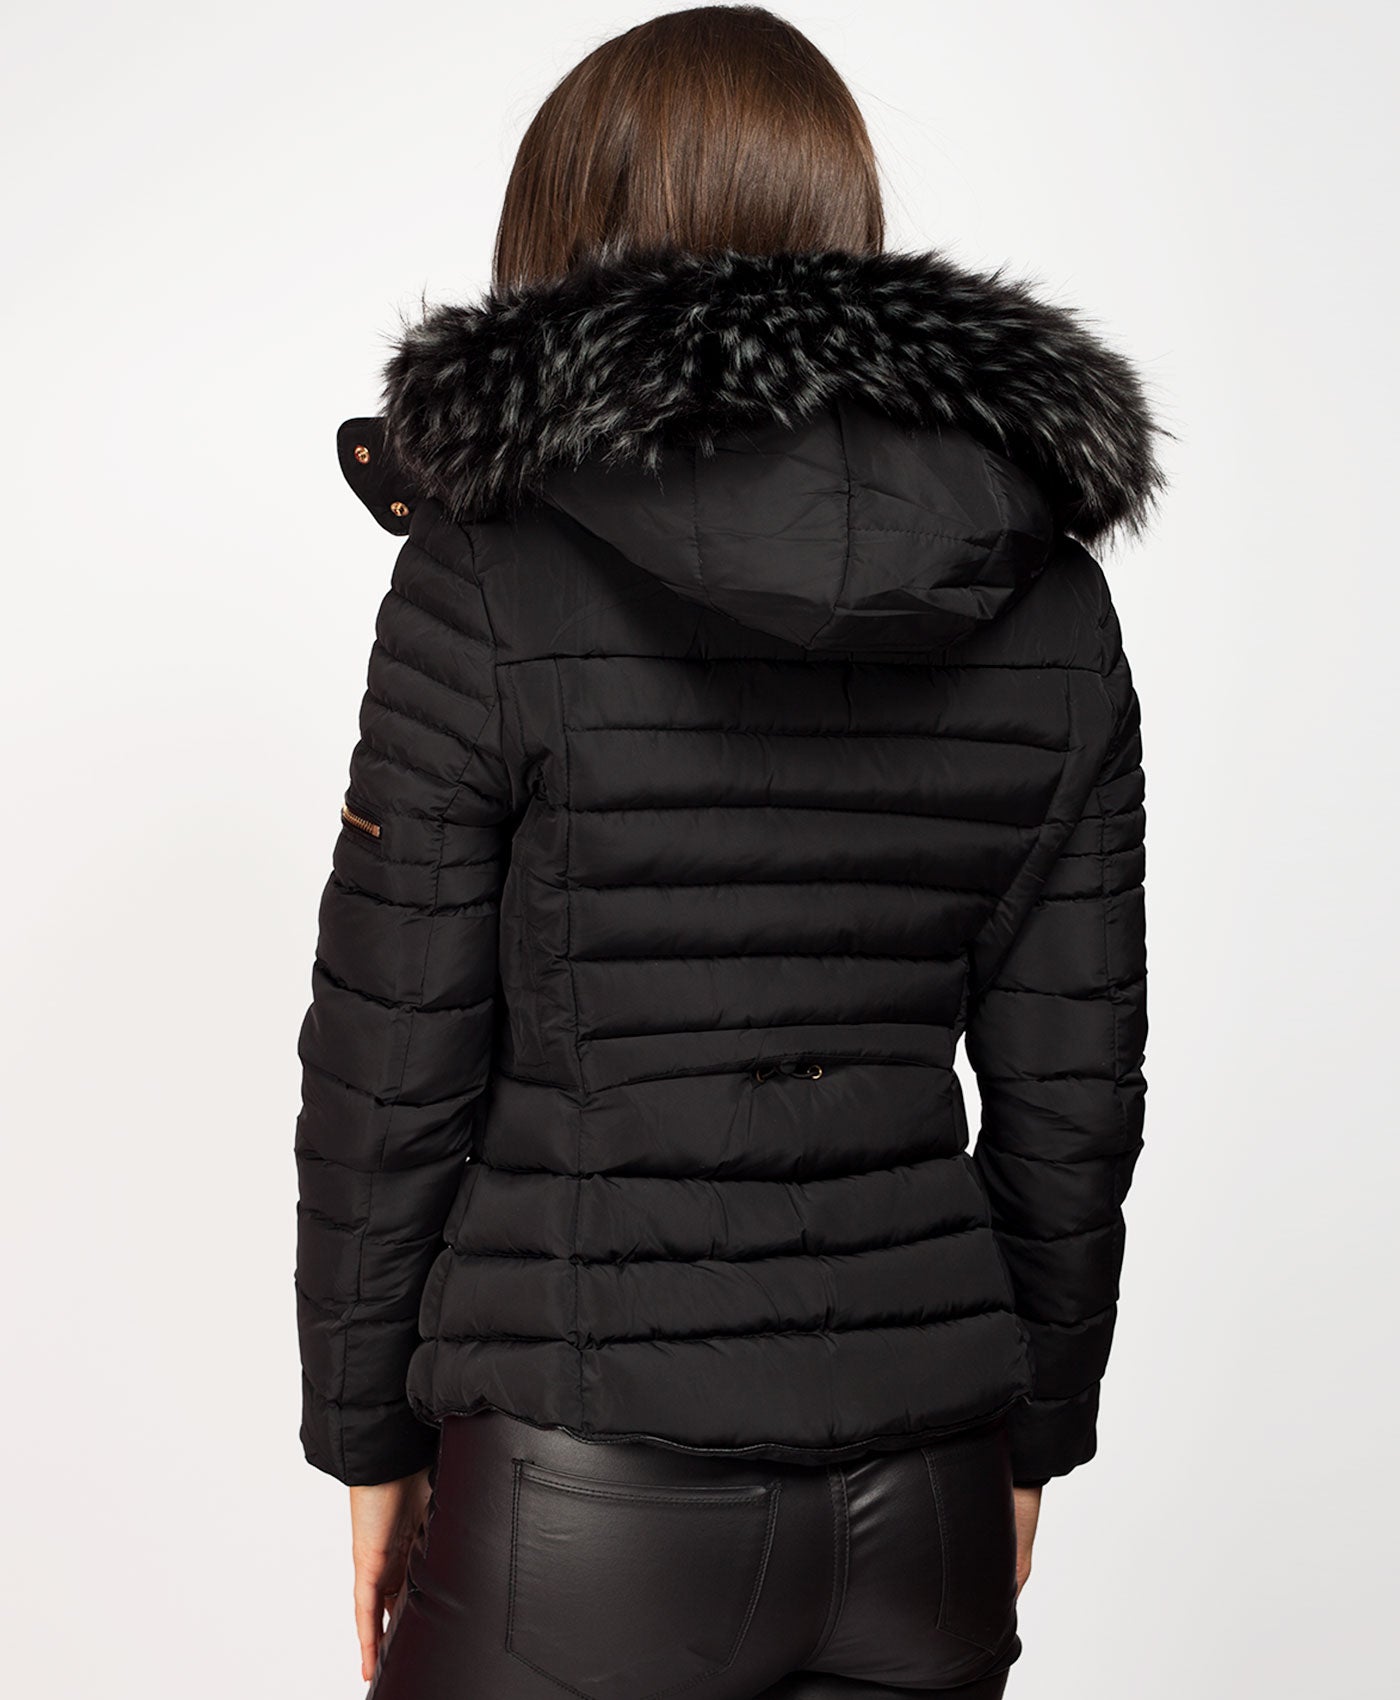 Black-Y-865-Double-Zip-Detail-Padded-Fur-Hooded-Puffer-Jacket-5a